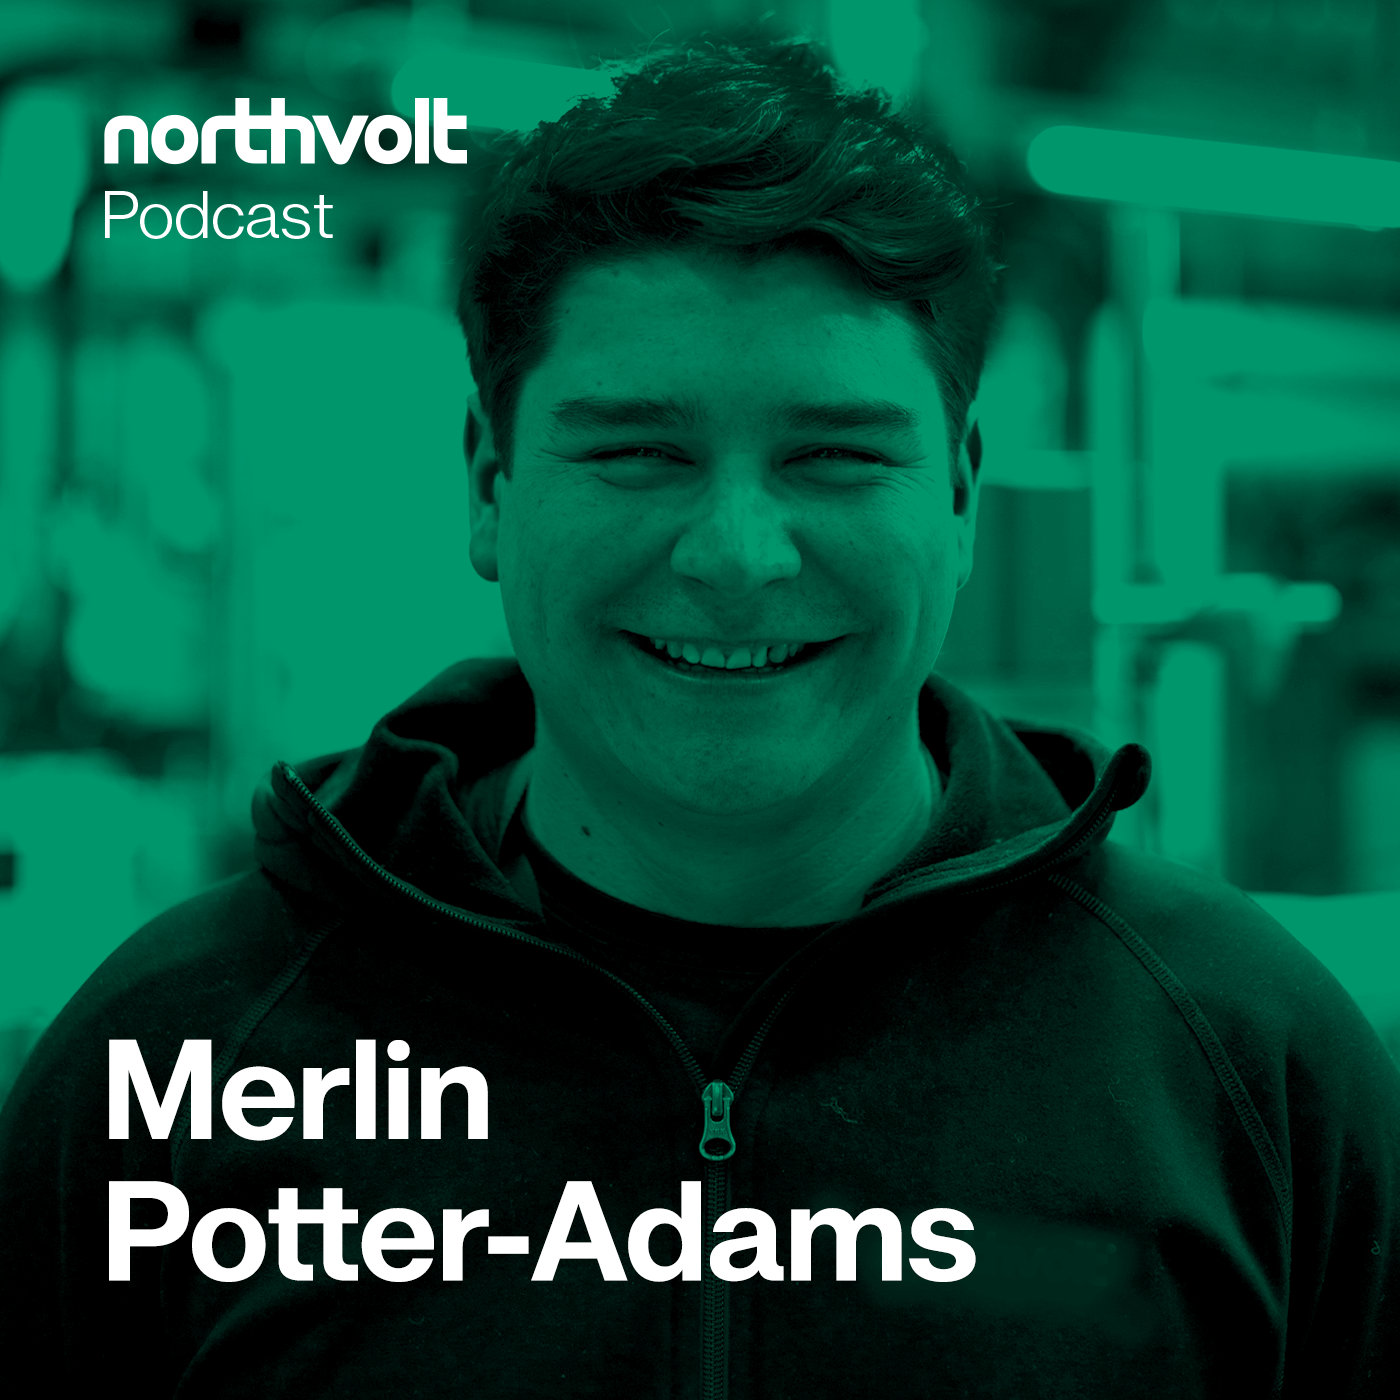 Challenge Accepted: Merlin Potter-Adams